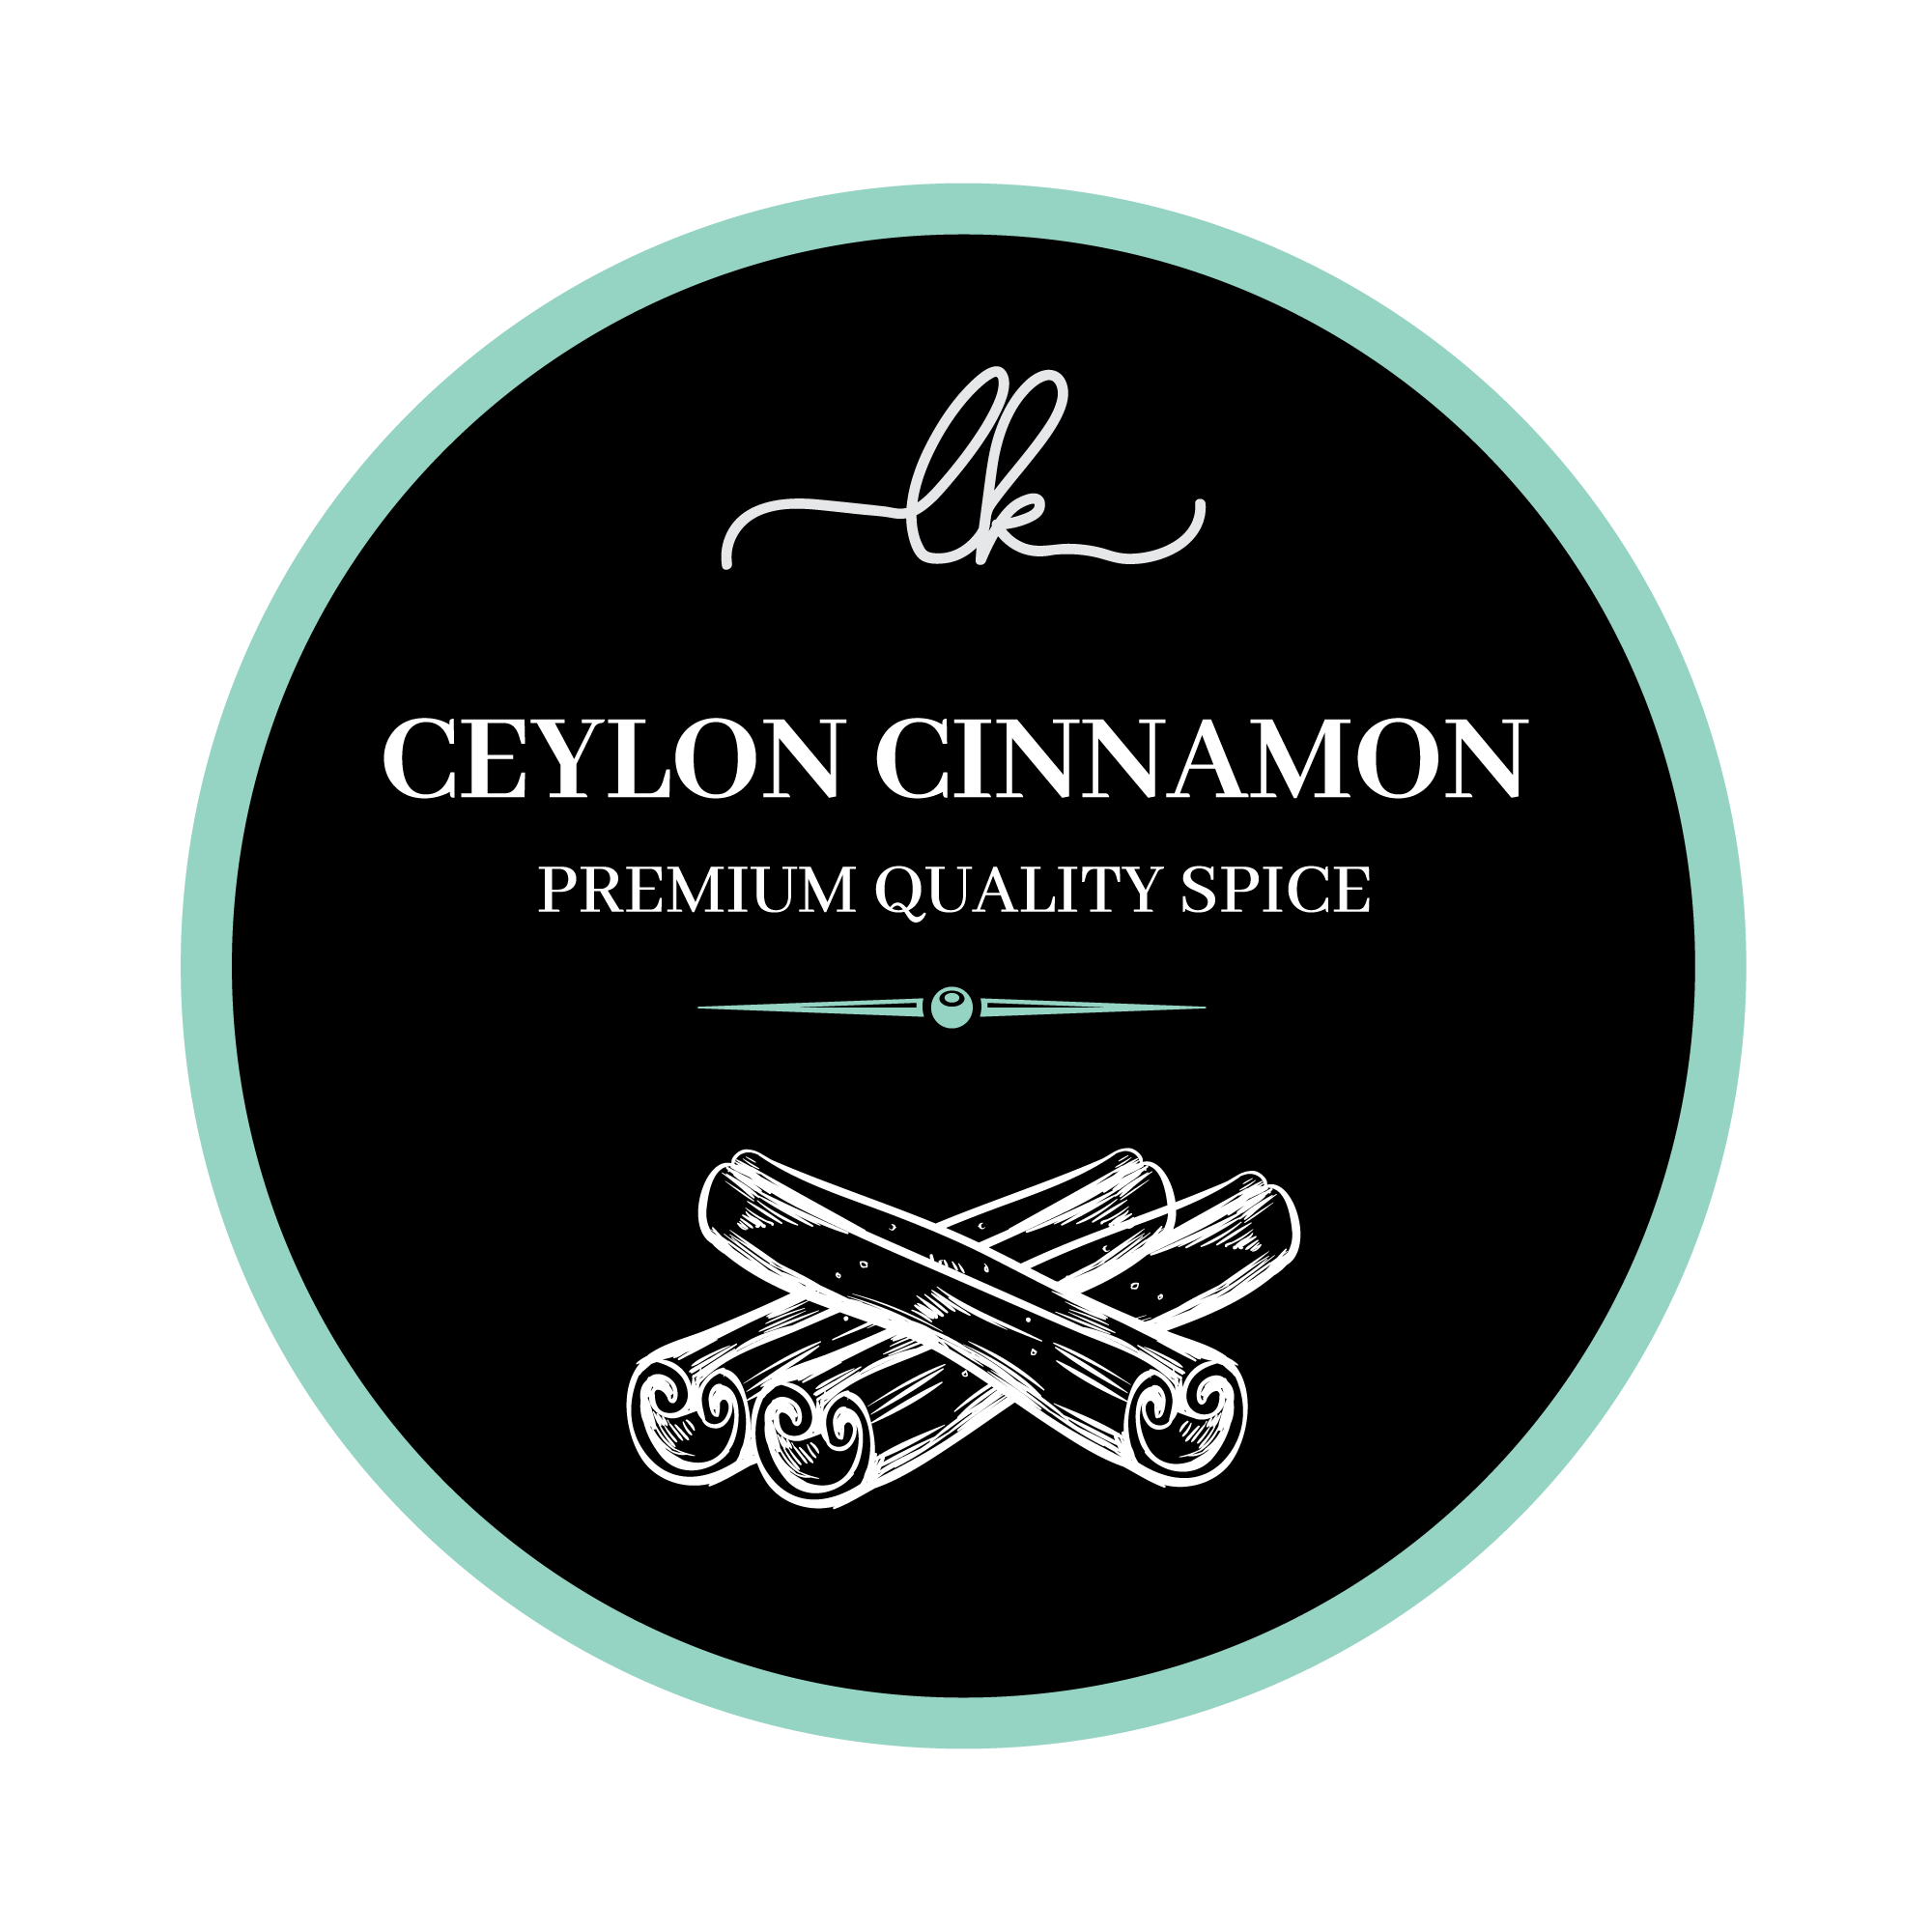 LK Ceylon Cinnamon